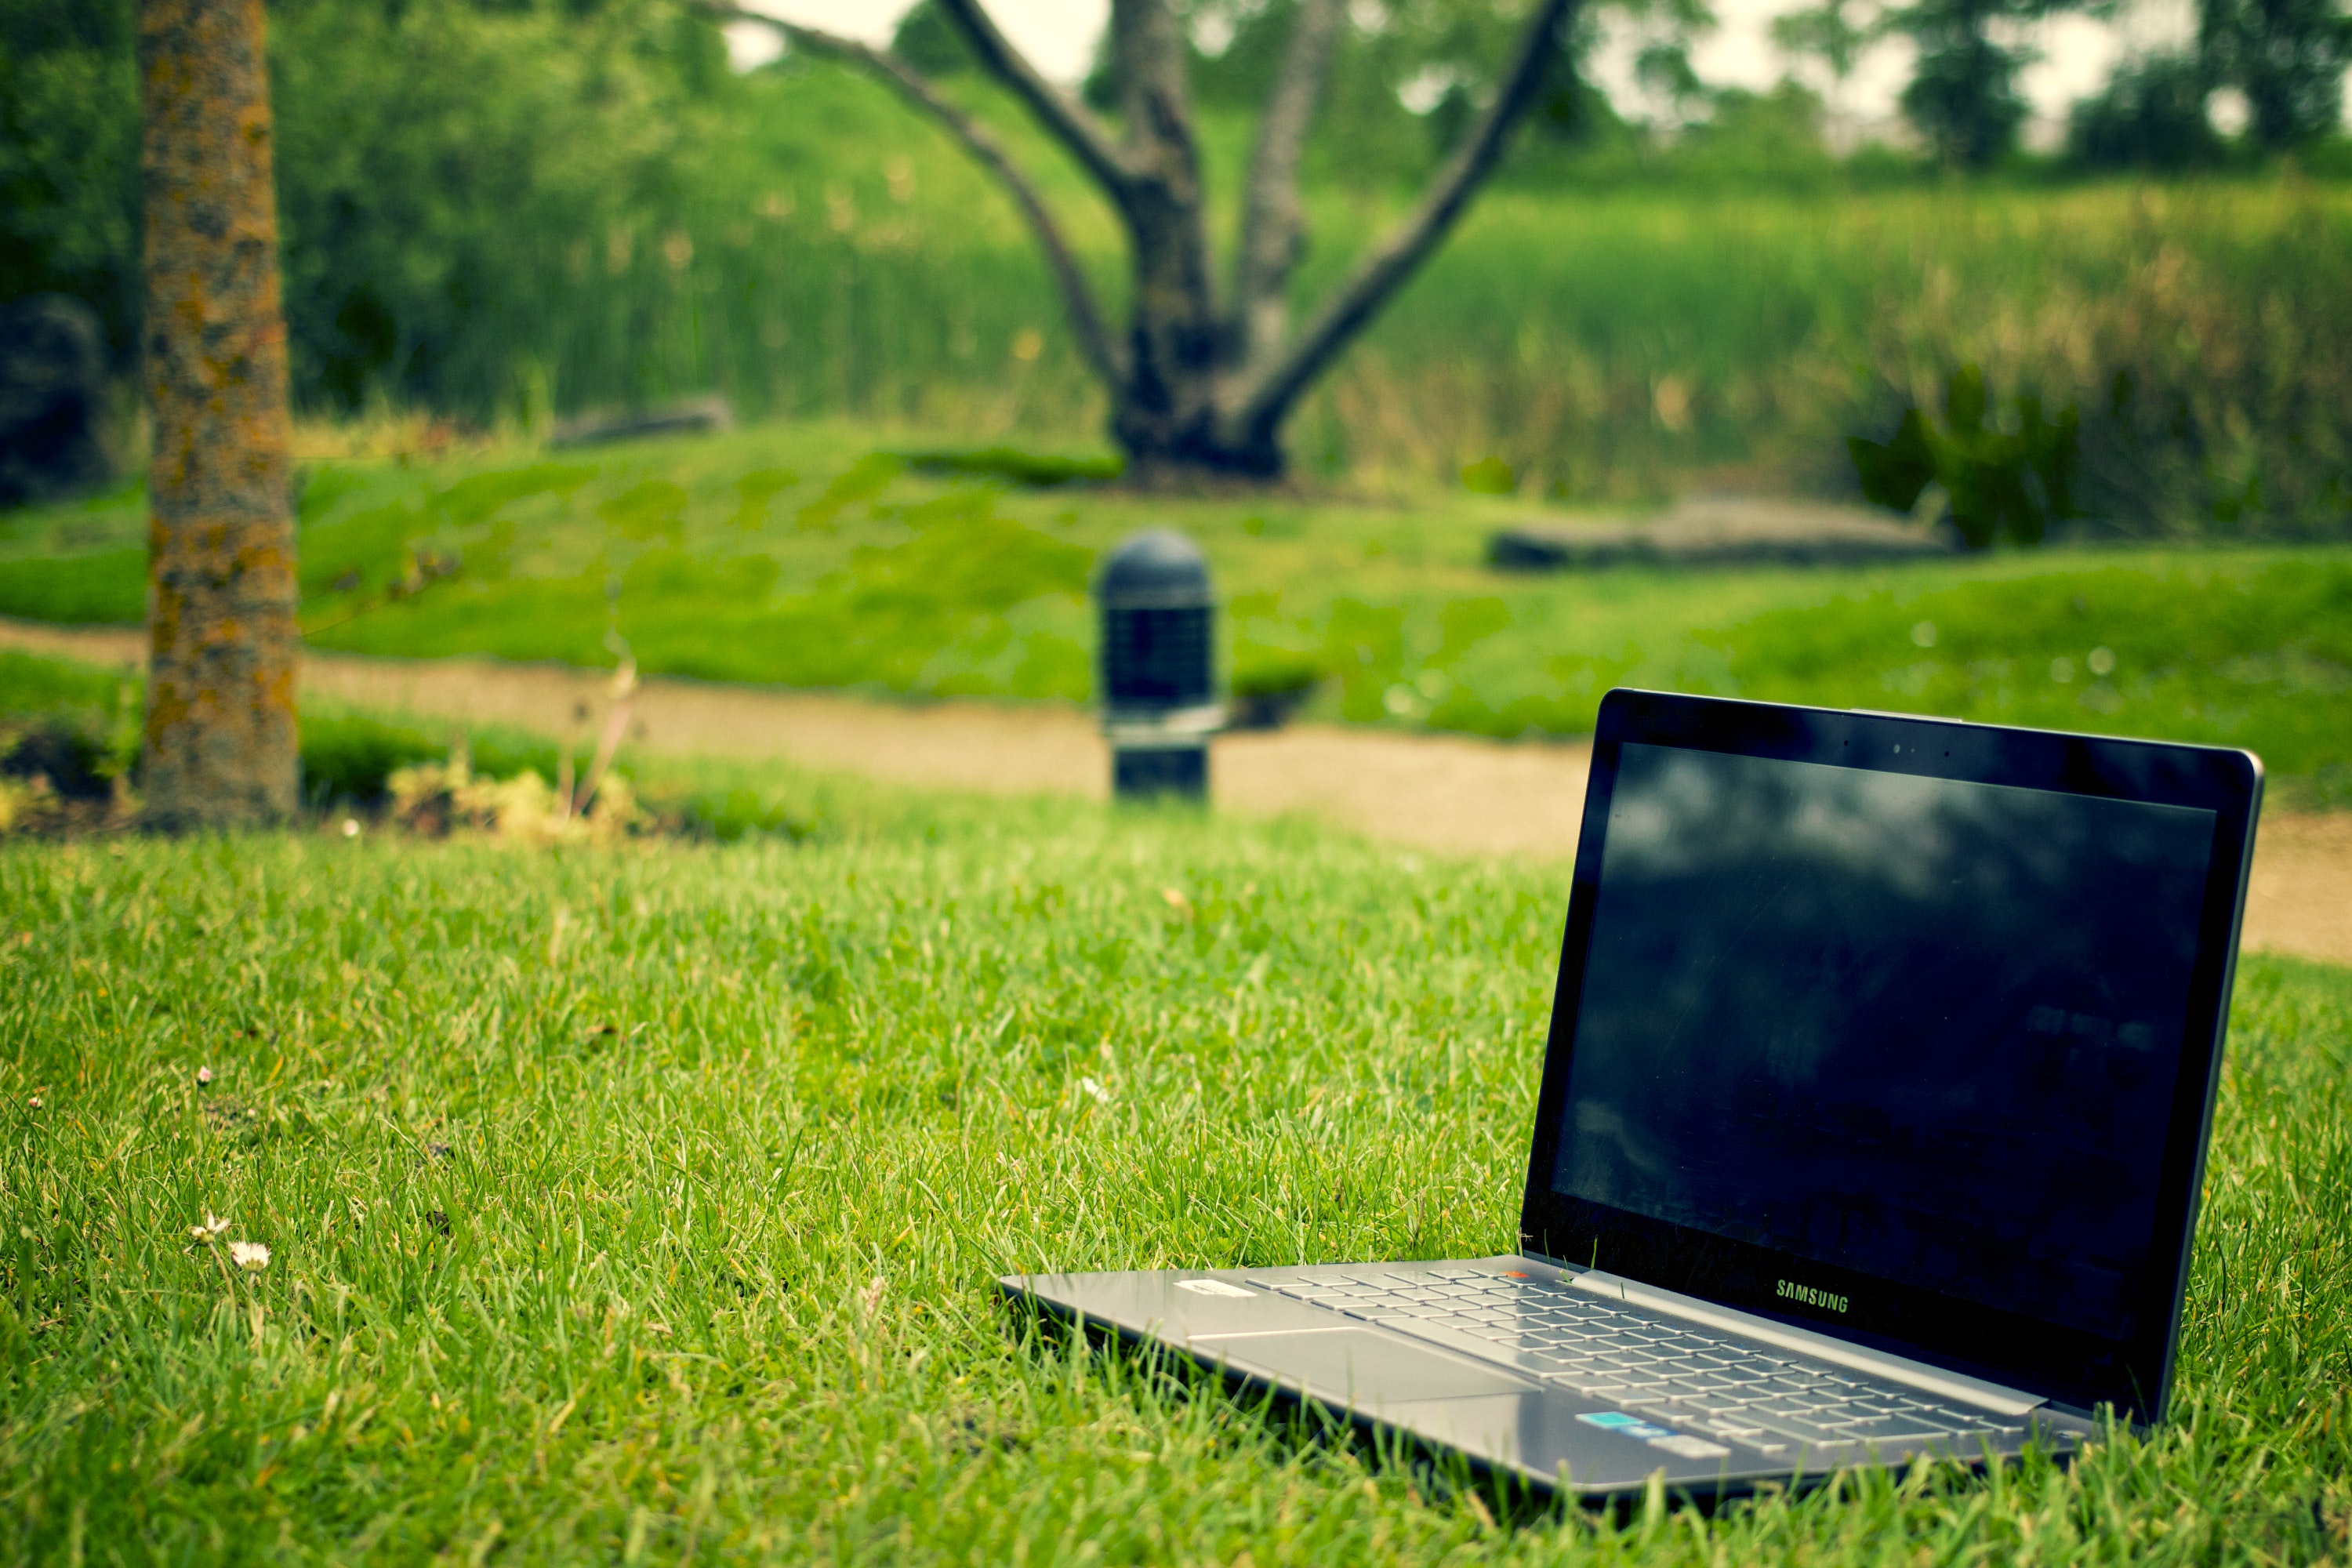 eco-grass-laptop-meadow-3129